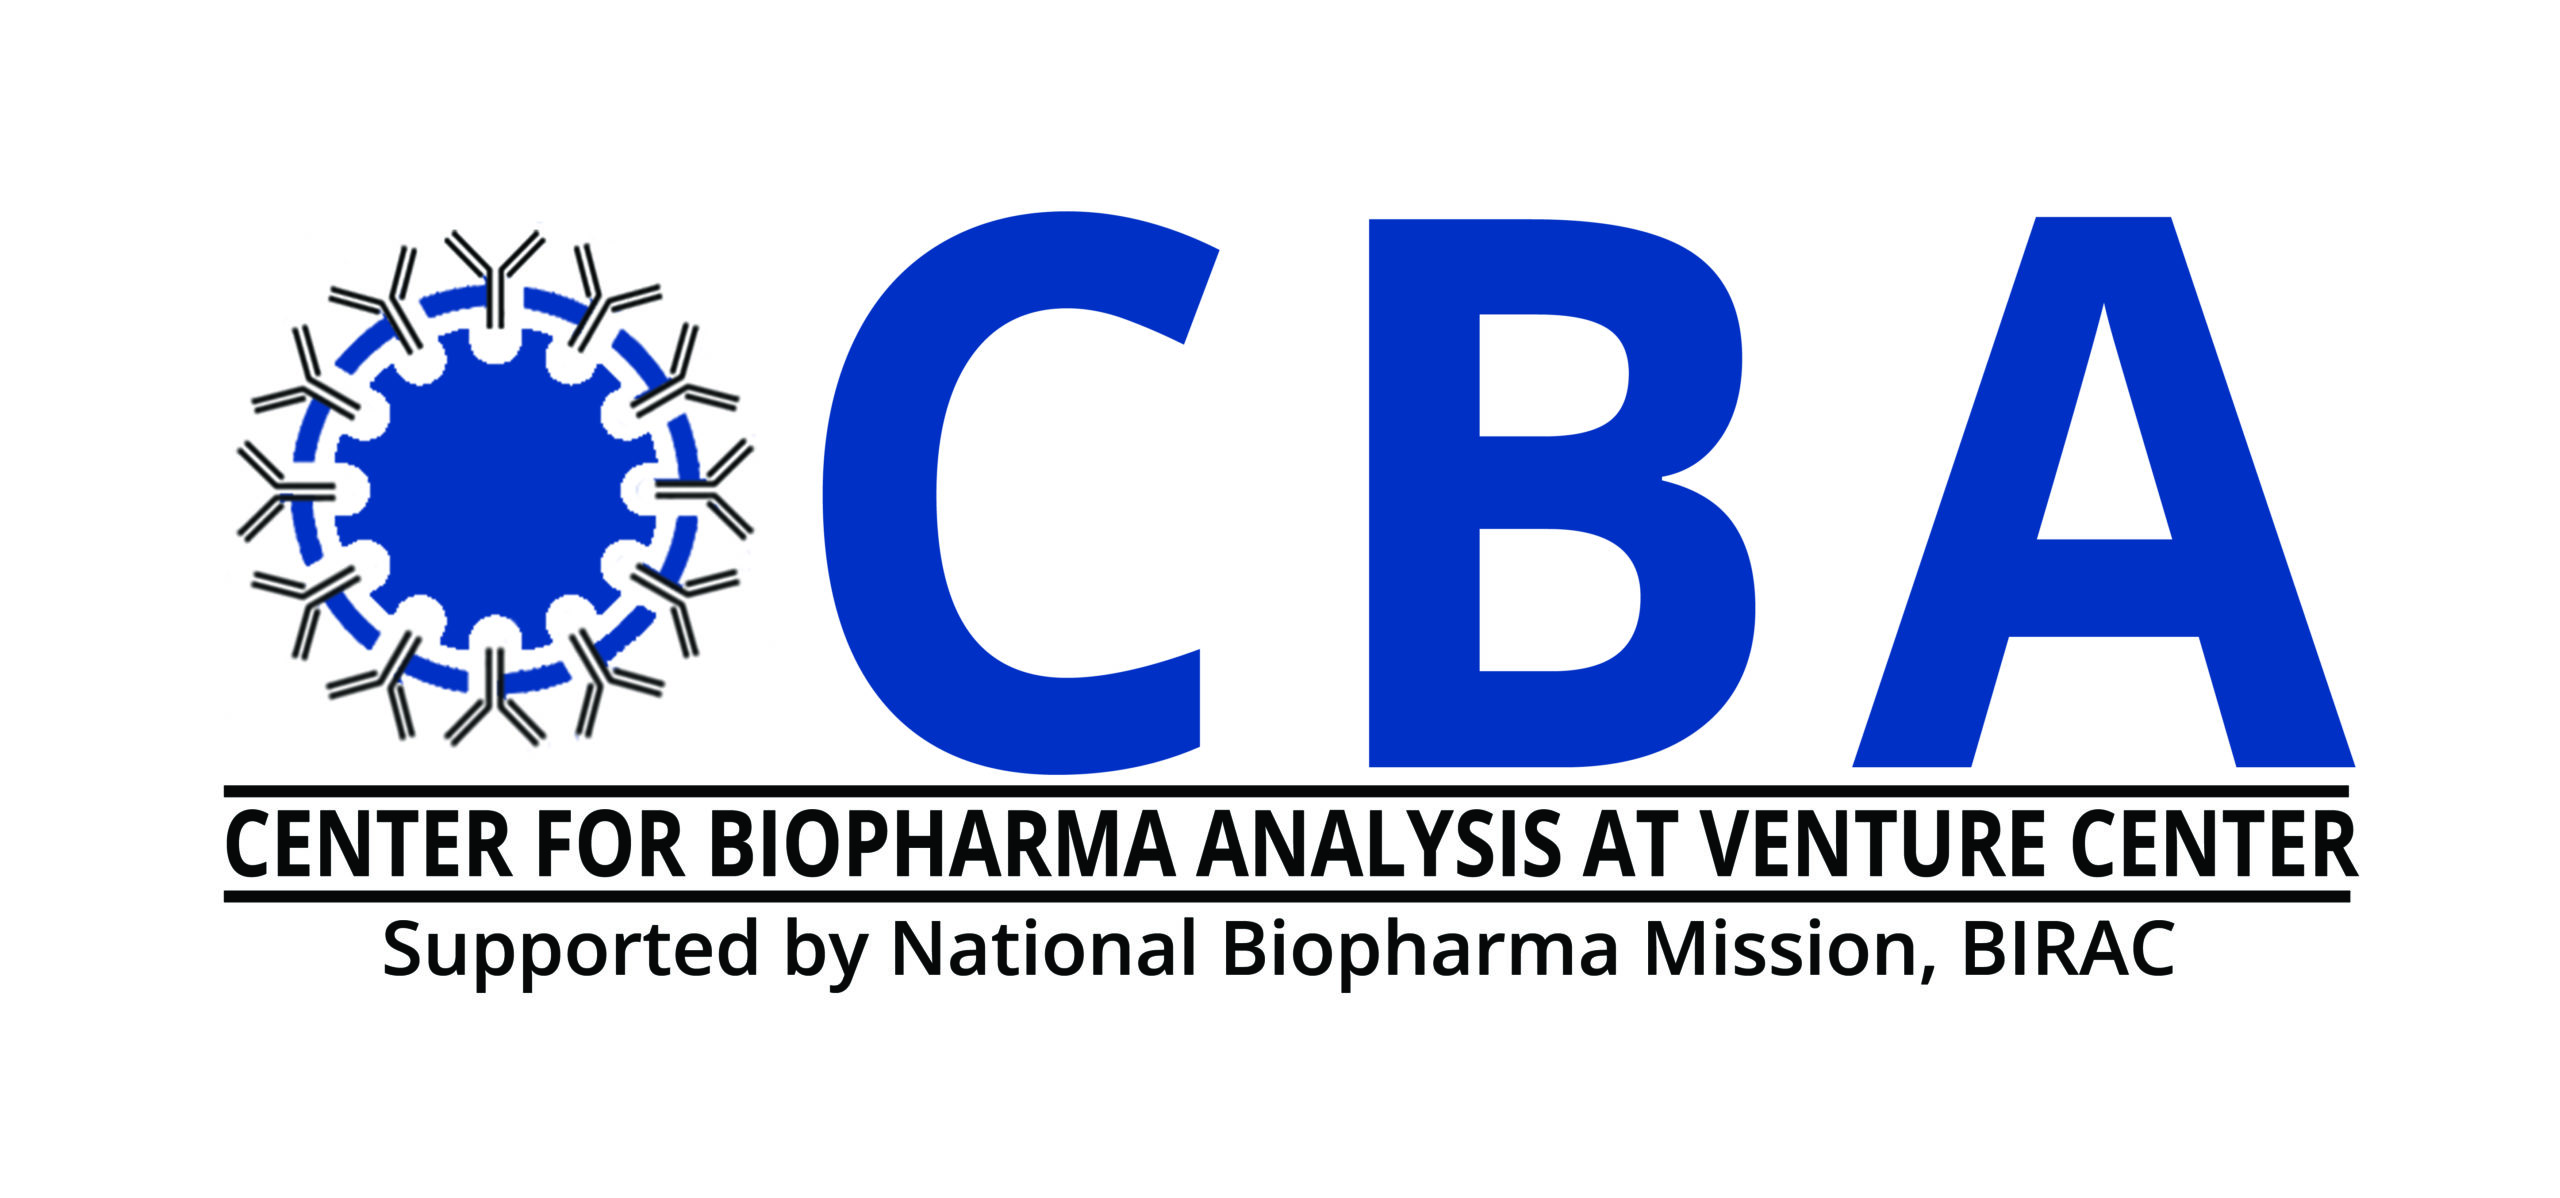 Center for Biopharma Analysis